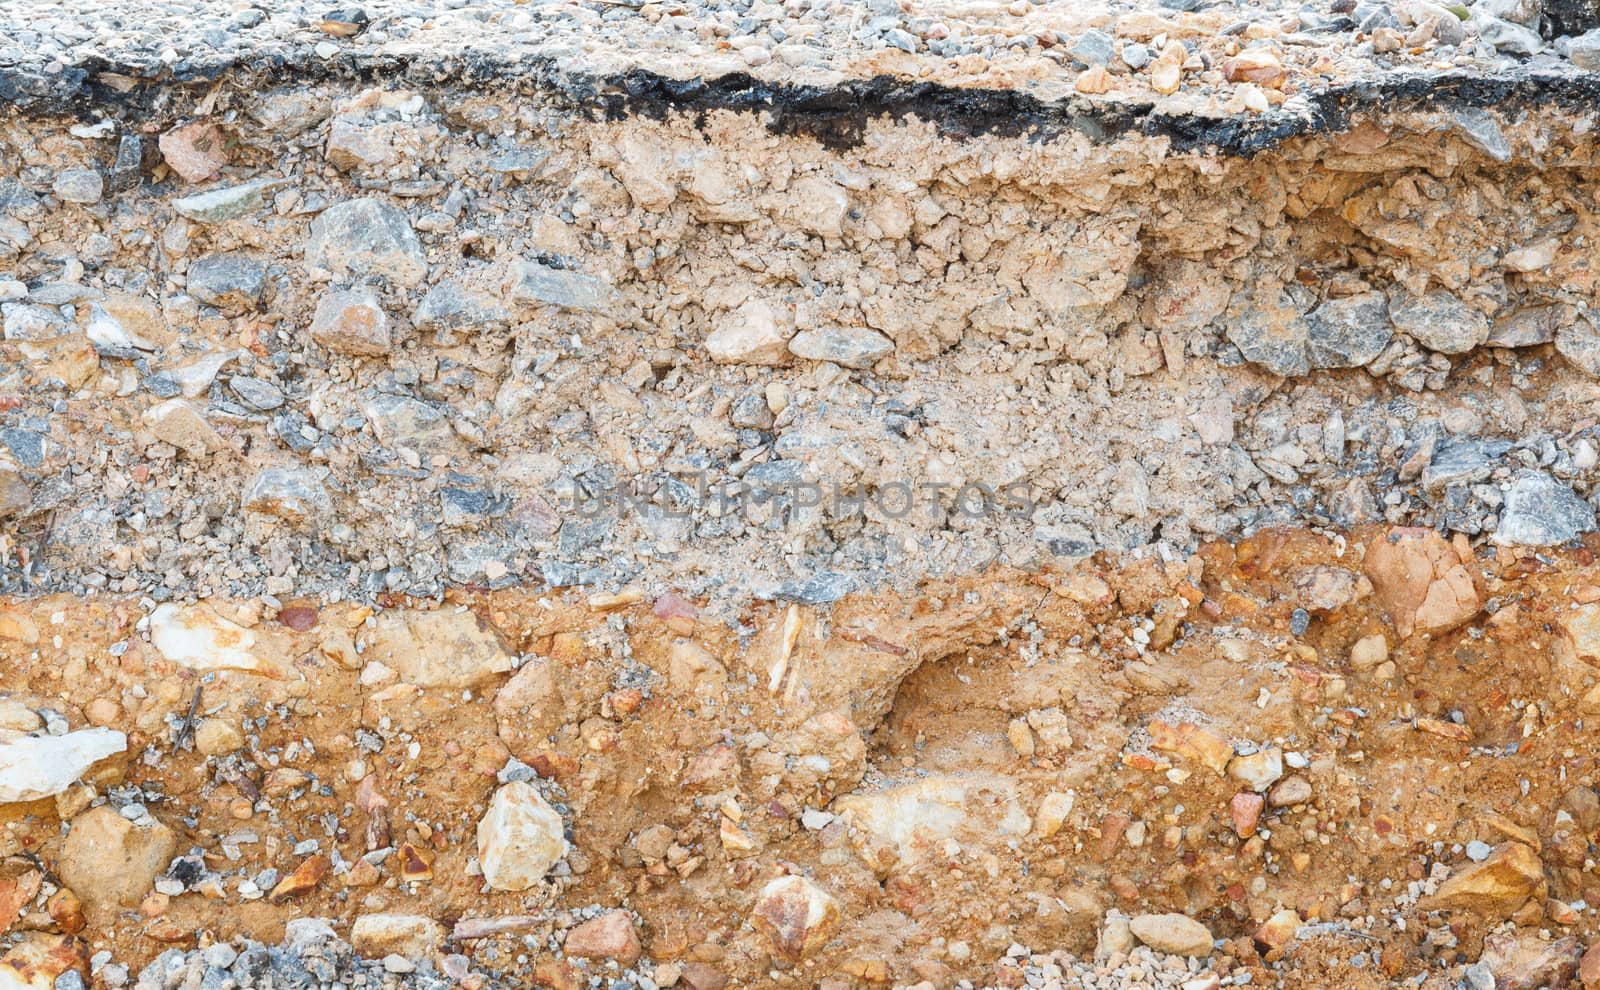 Layer of soil beneath the asphalt road